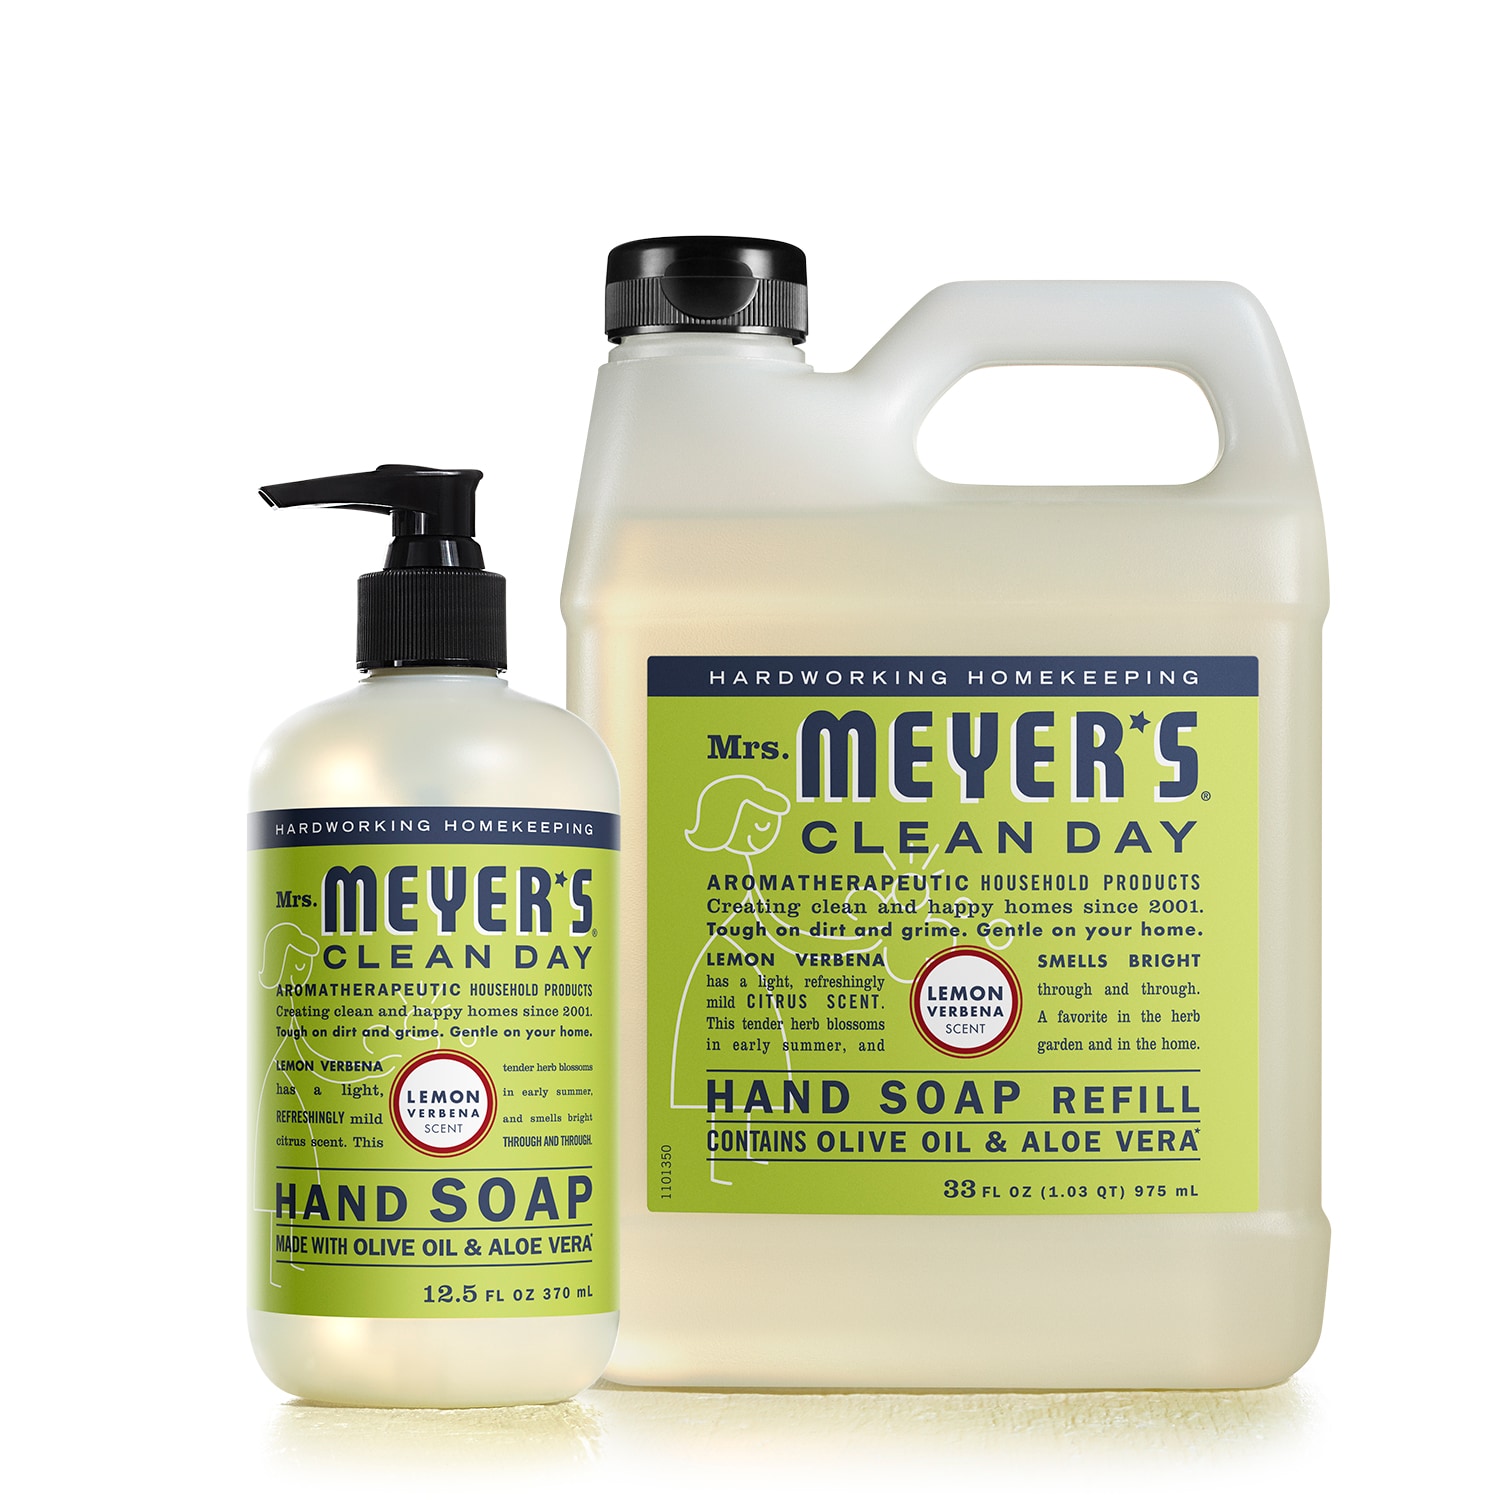 Mrs. Meyers Clean Day Orange Clove Hand Soap Bottle, 12.5oz